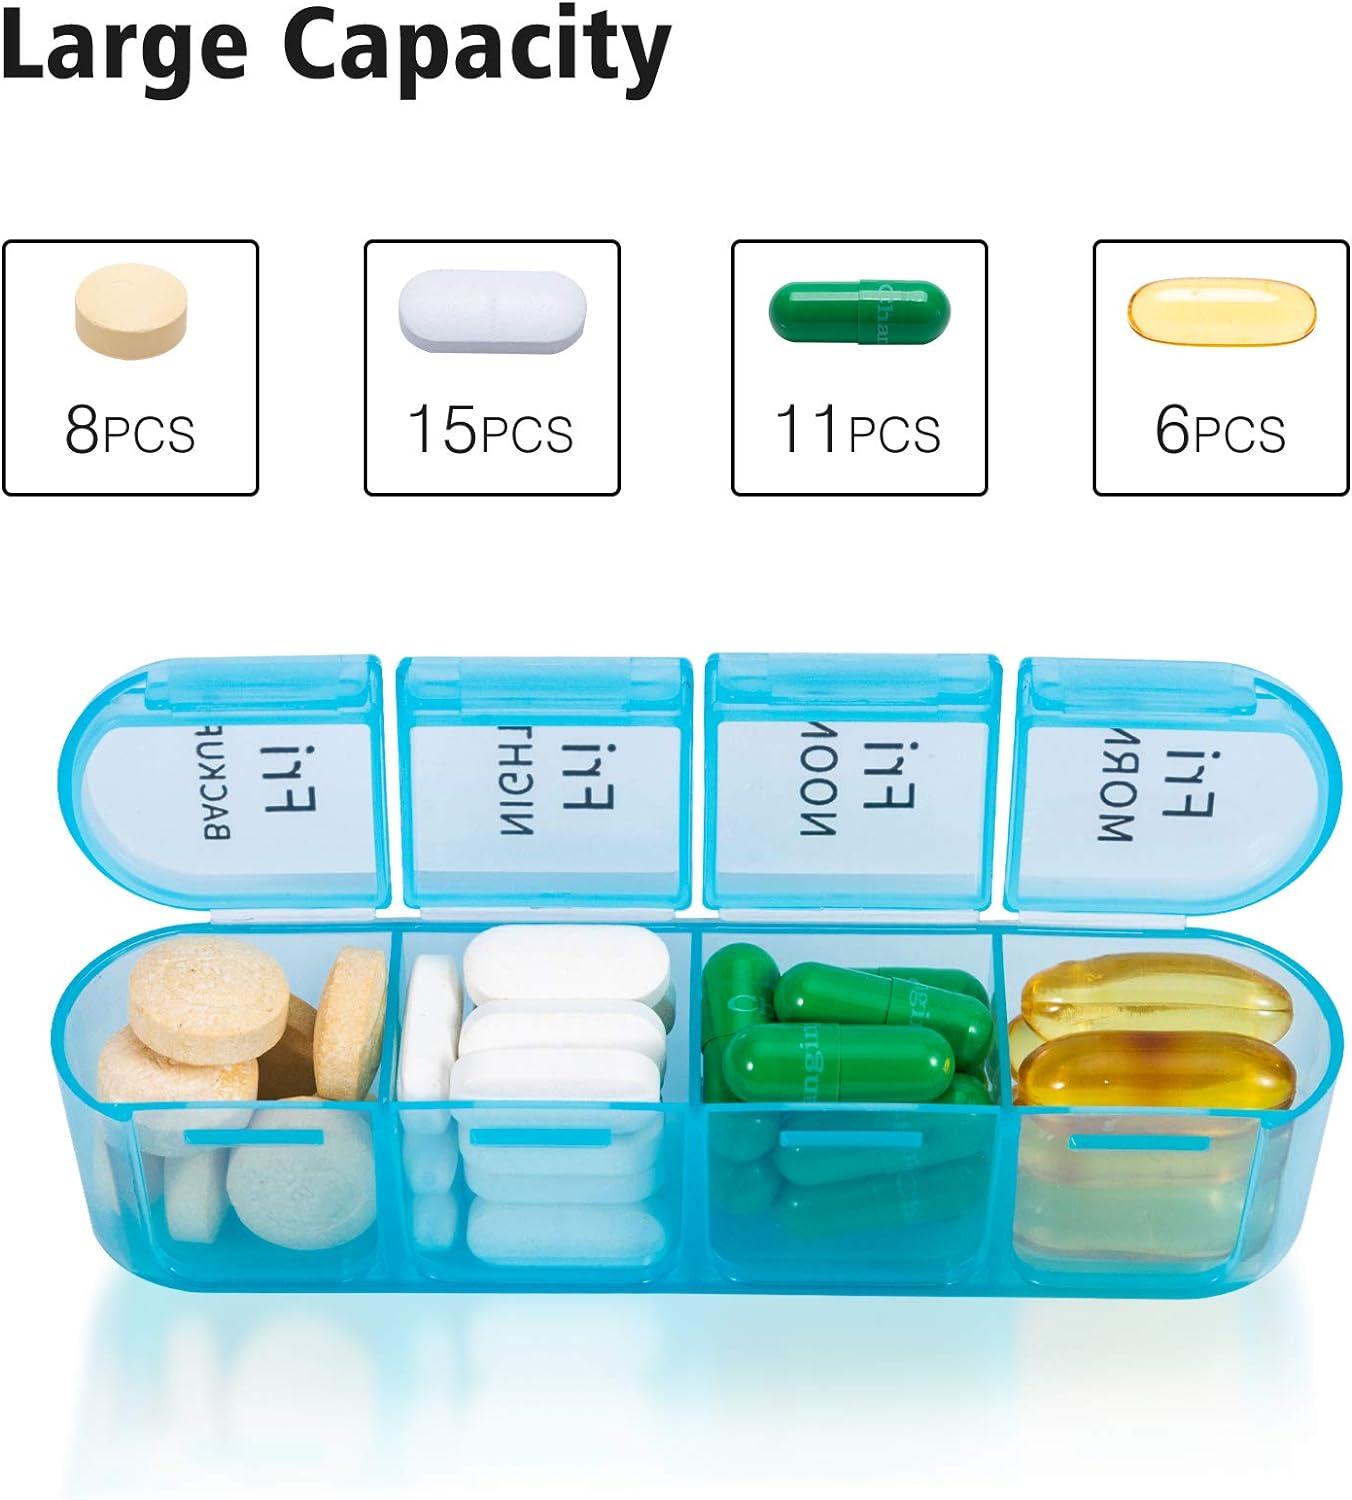 7 Day Weekly Pills Box Tablet Medicine Storage Case Drugs